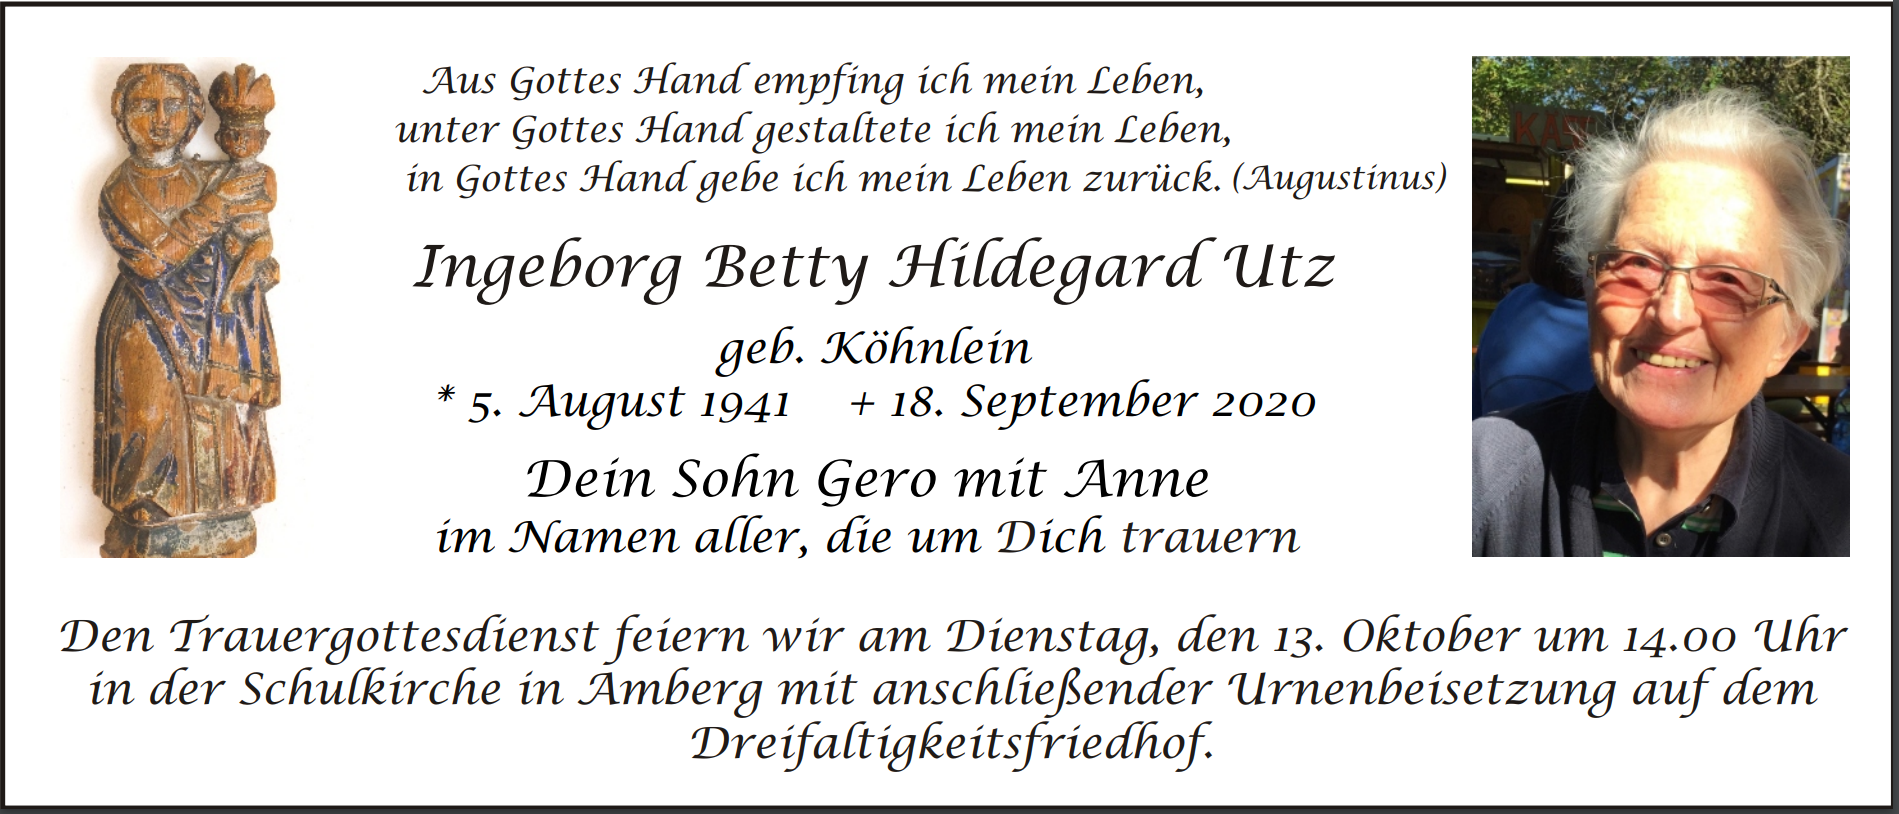 Traueranzeige Ingeborg Betty Hildegard Utz, Amberg